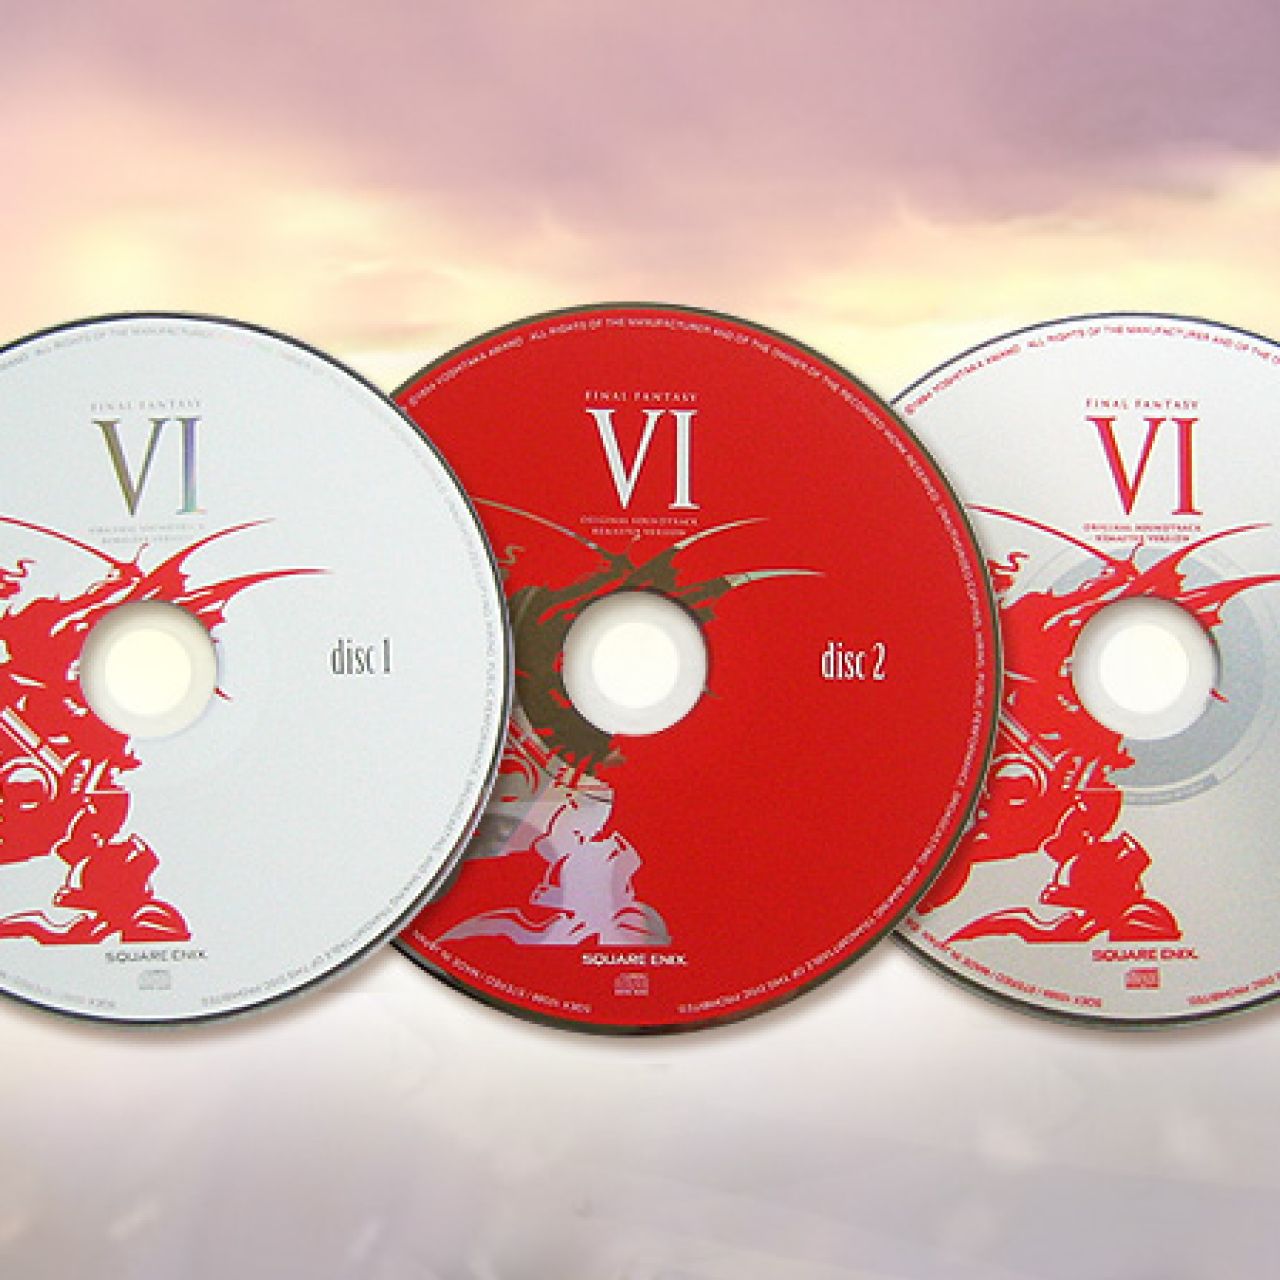 download final fantasy vi original soundtrack remaster version